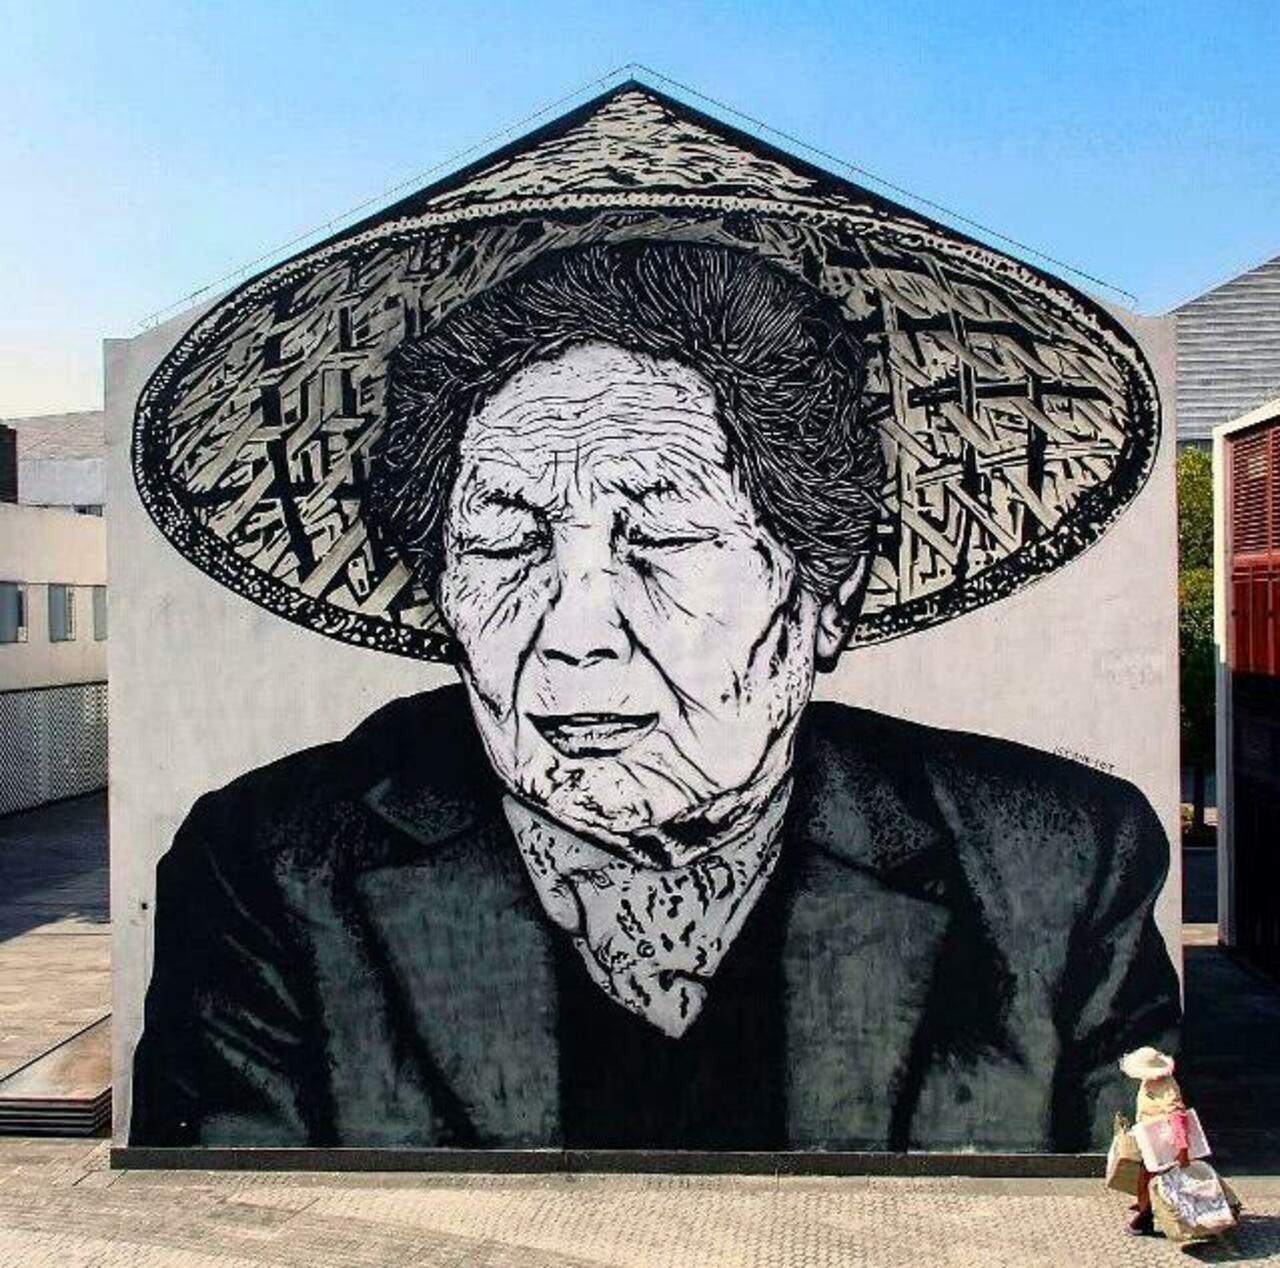 New Street Art by icy&sot in Shanghai  

#art #graffiti #mural #streetart http://t.co/gyH0eEsCJu